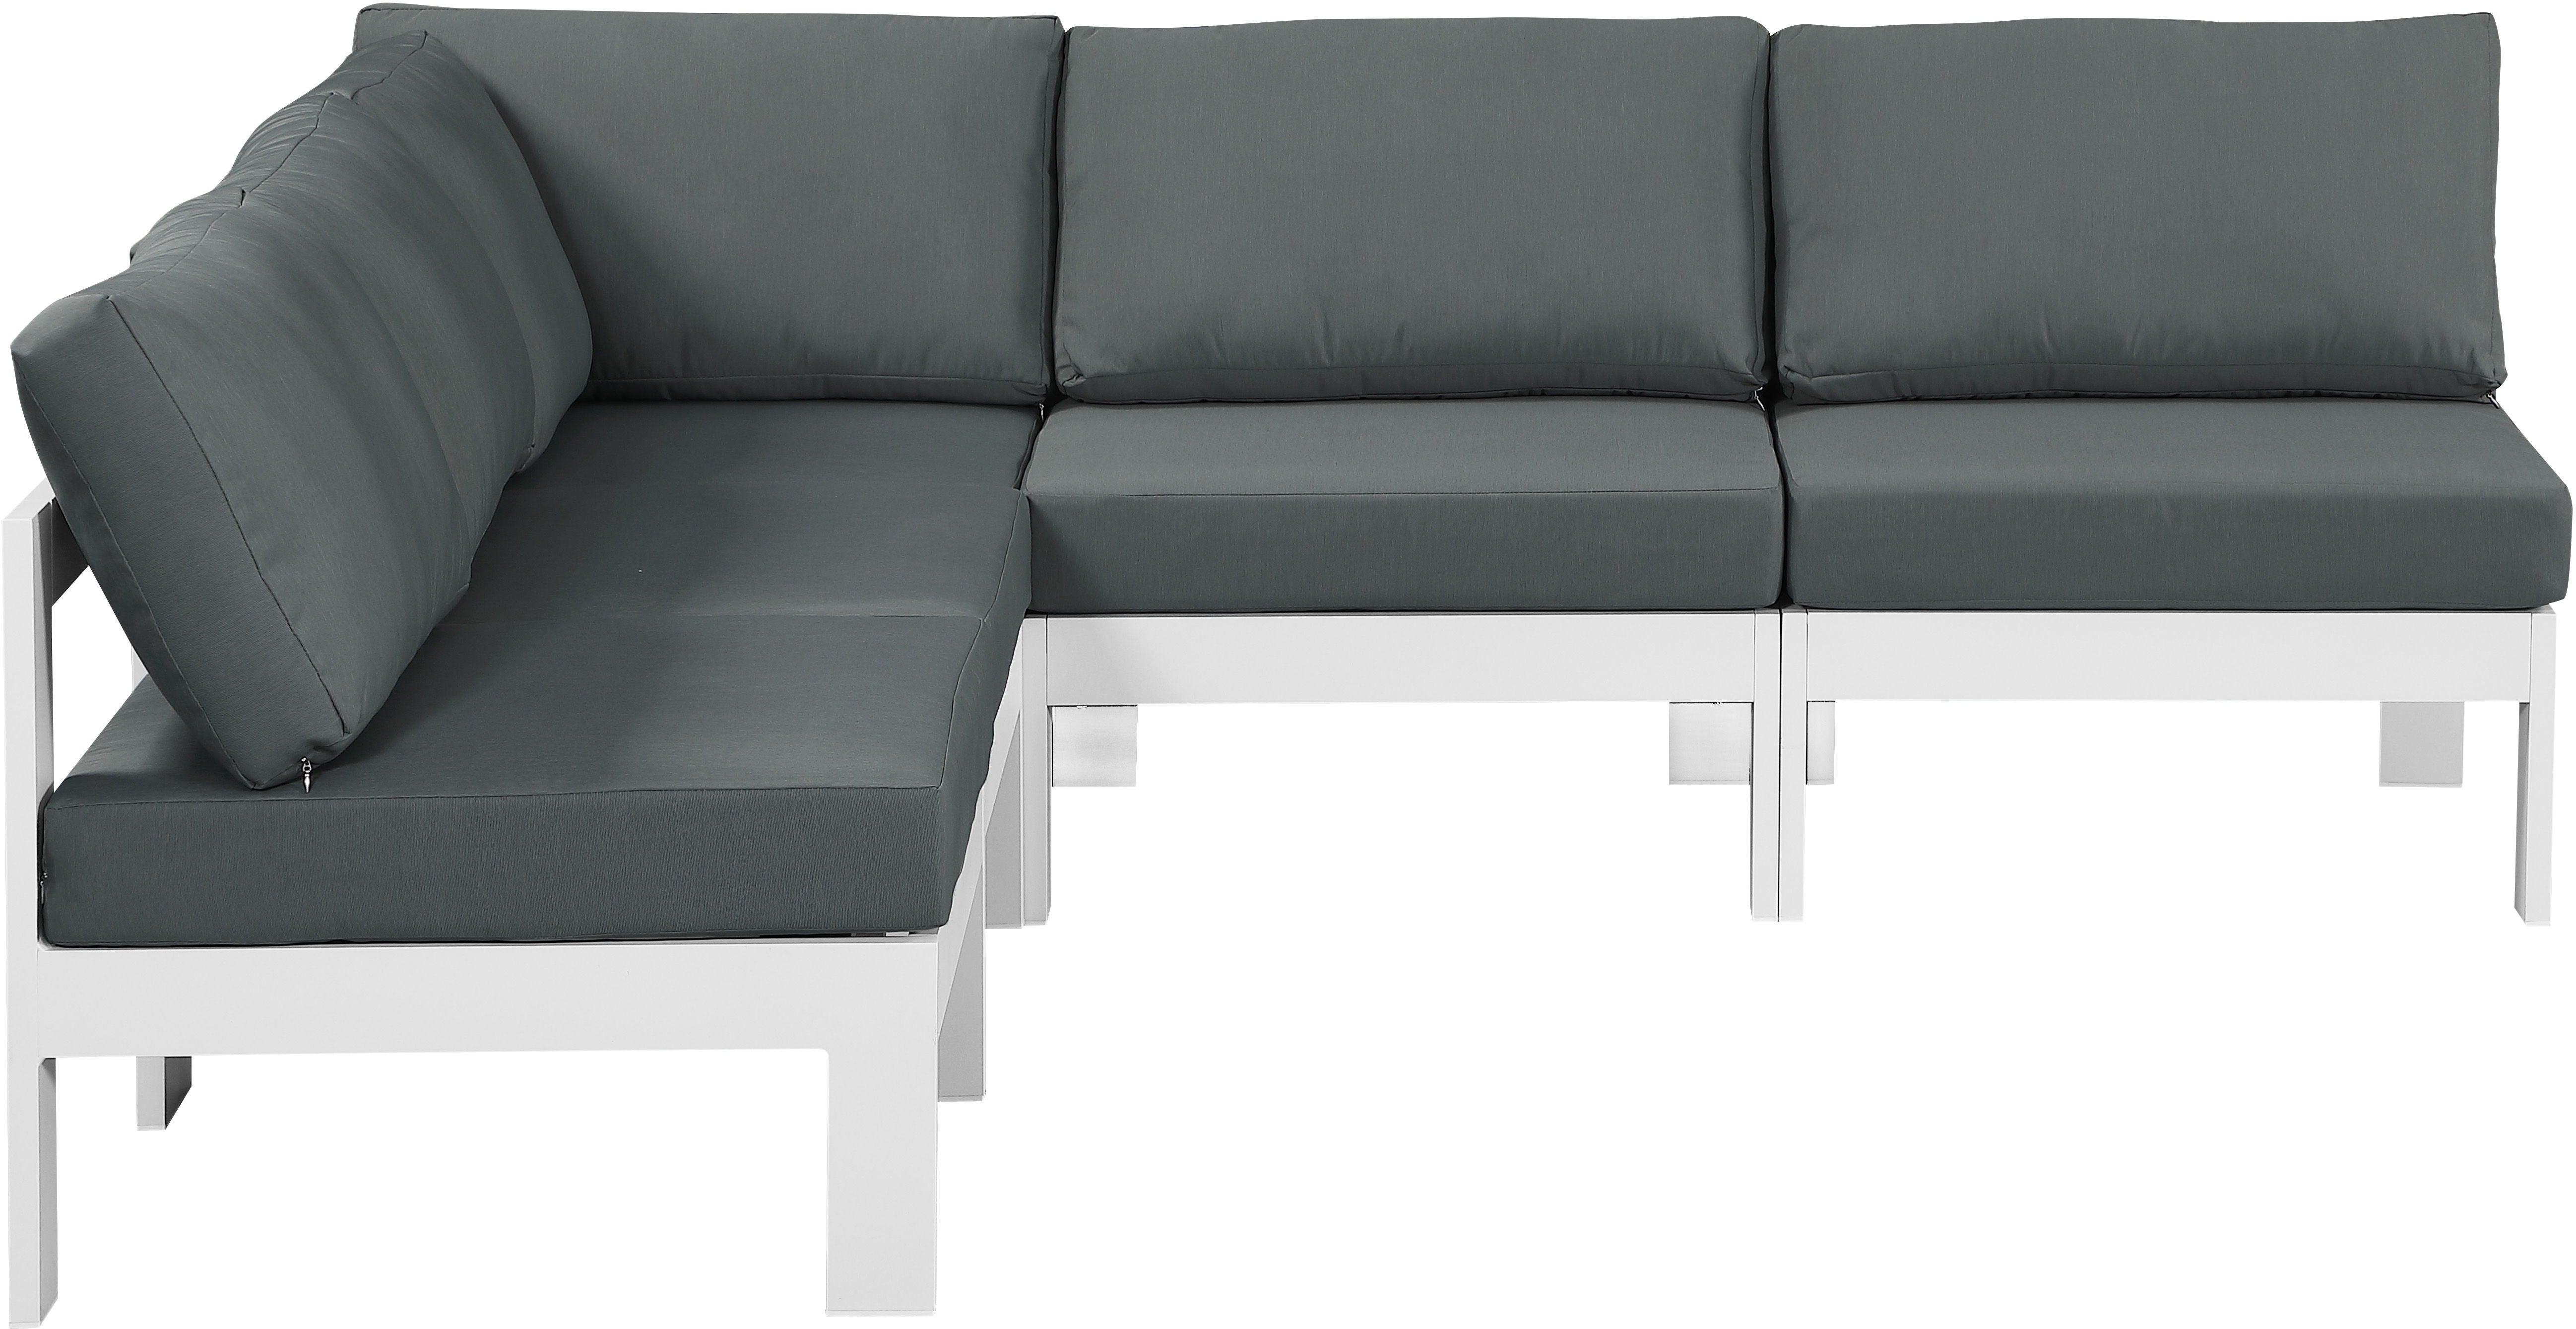 Meridian Furniture - Nizuc - Outdoor Patio Modular Sectional 5 Piece - Grey - Modern & Contemporary - 5th Avenue Furniture